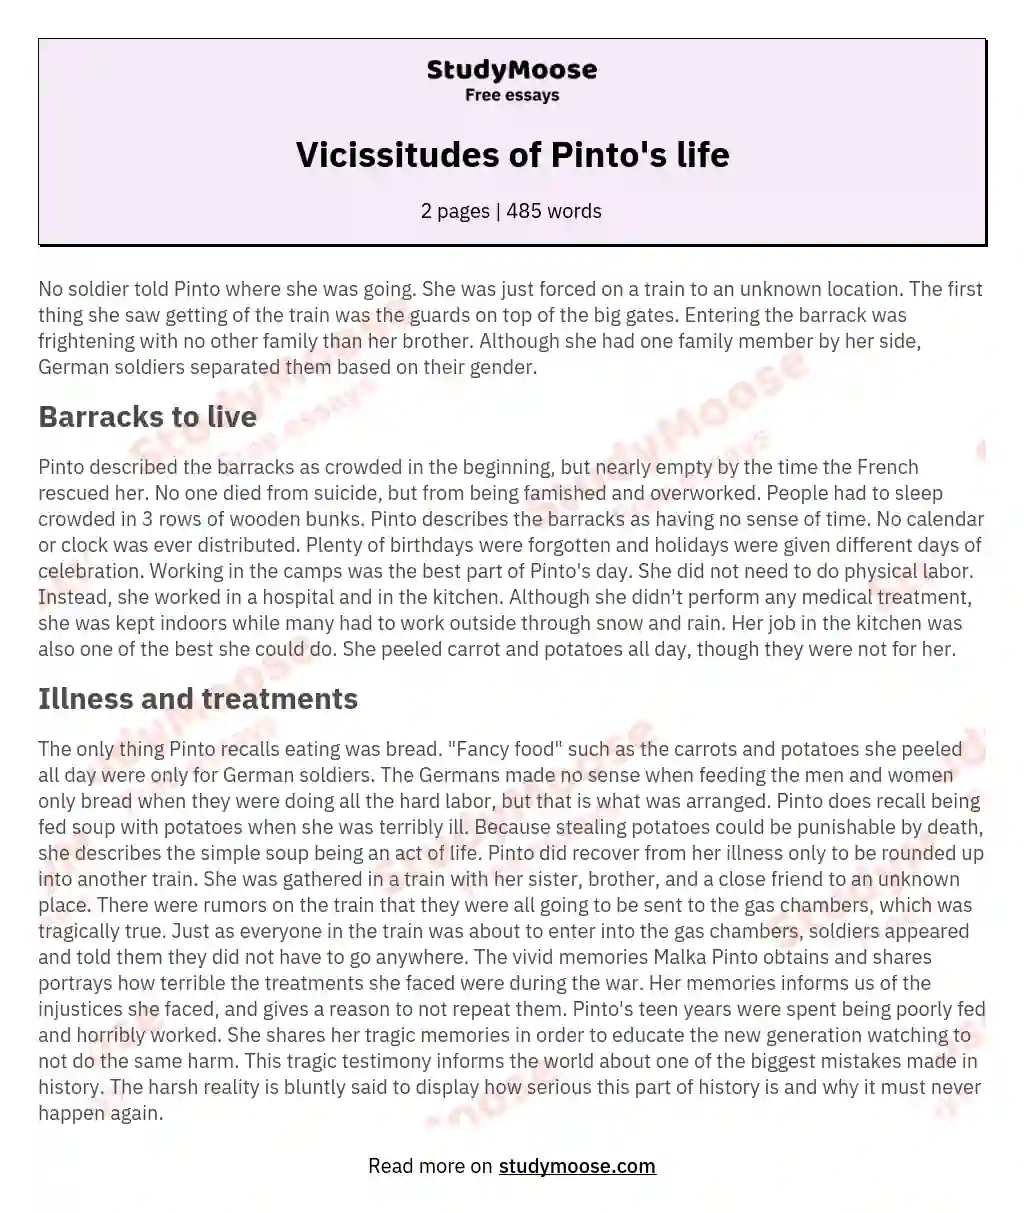 Vicissitudes of Pinto's life essay